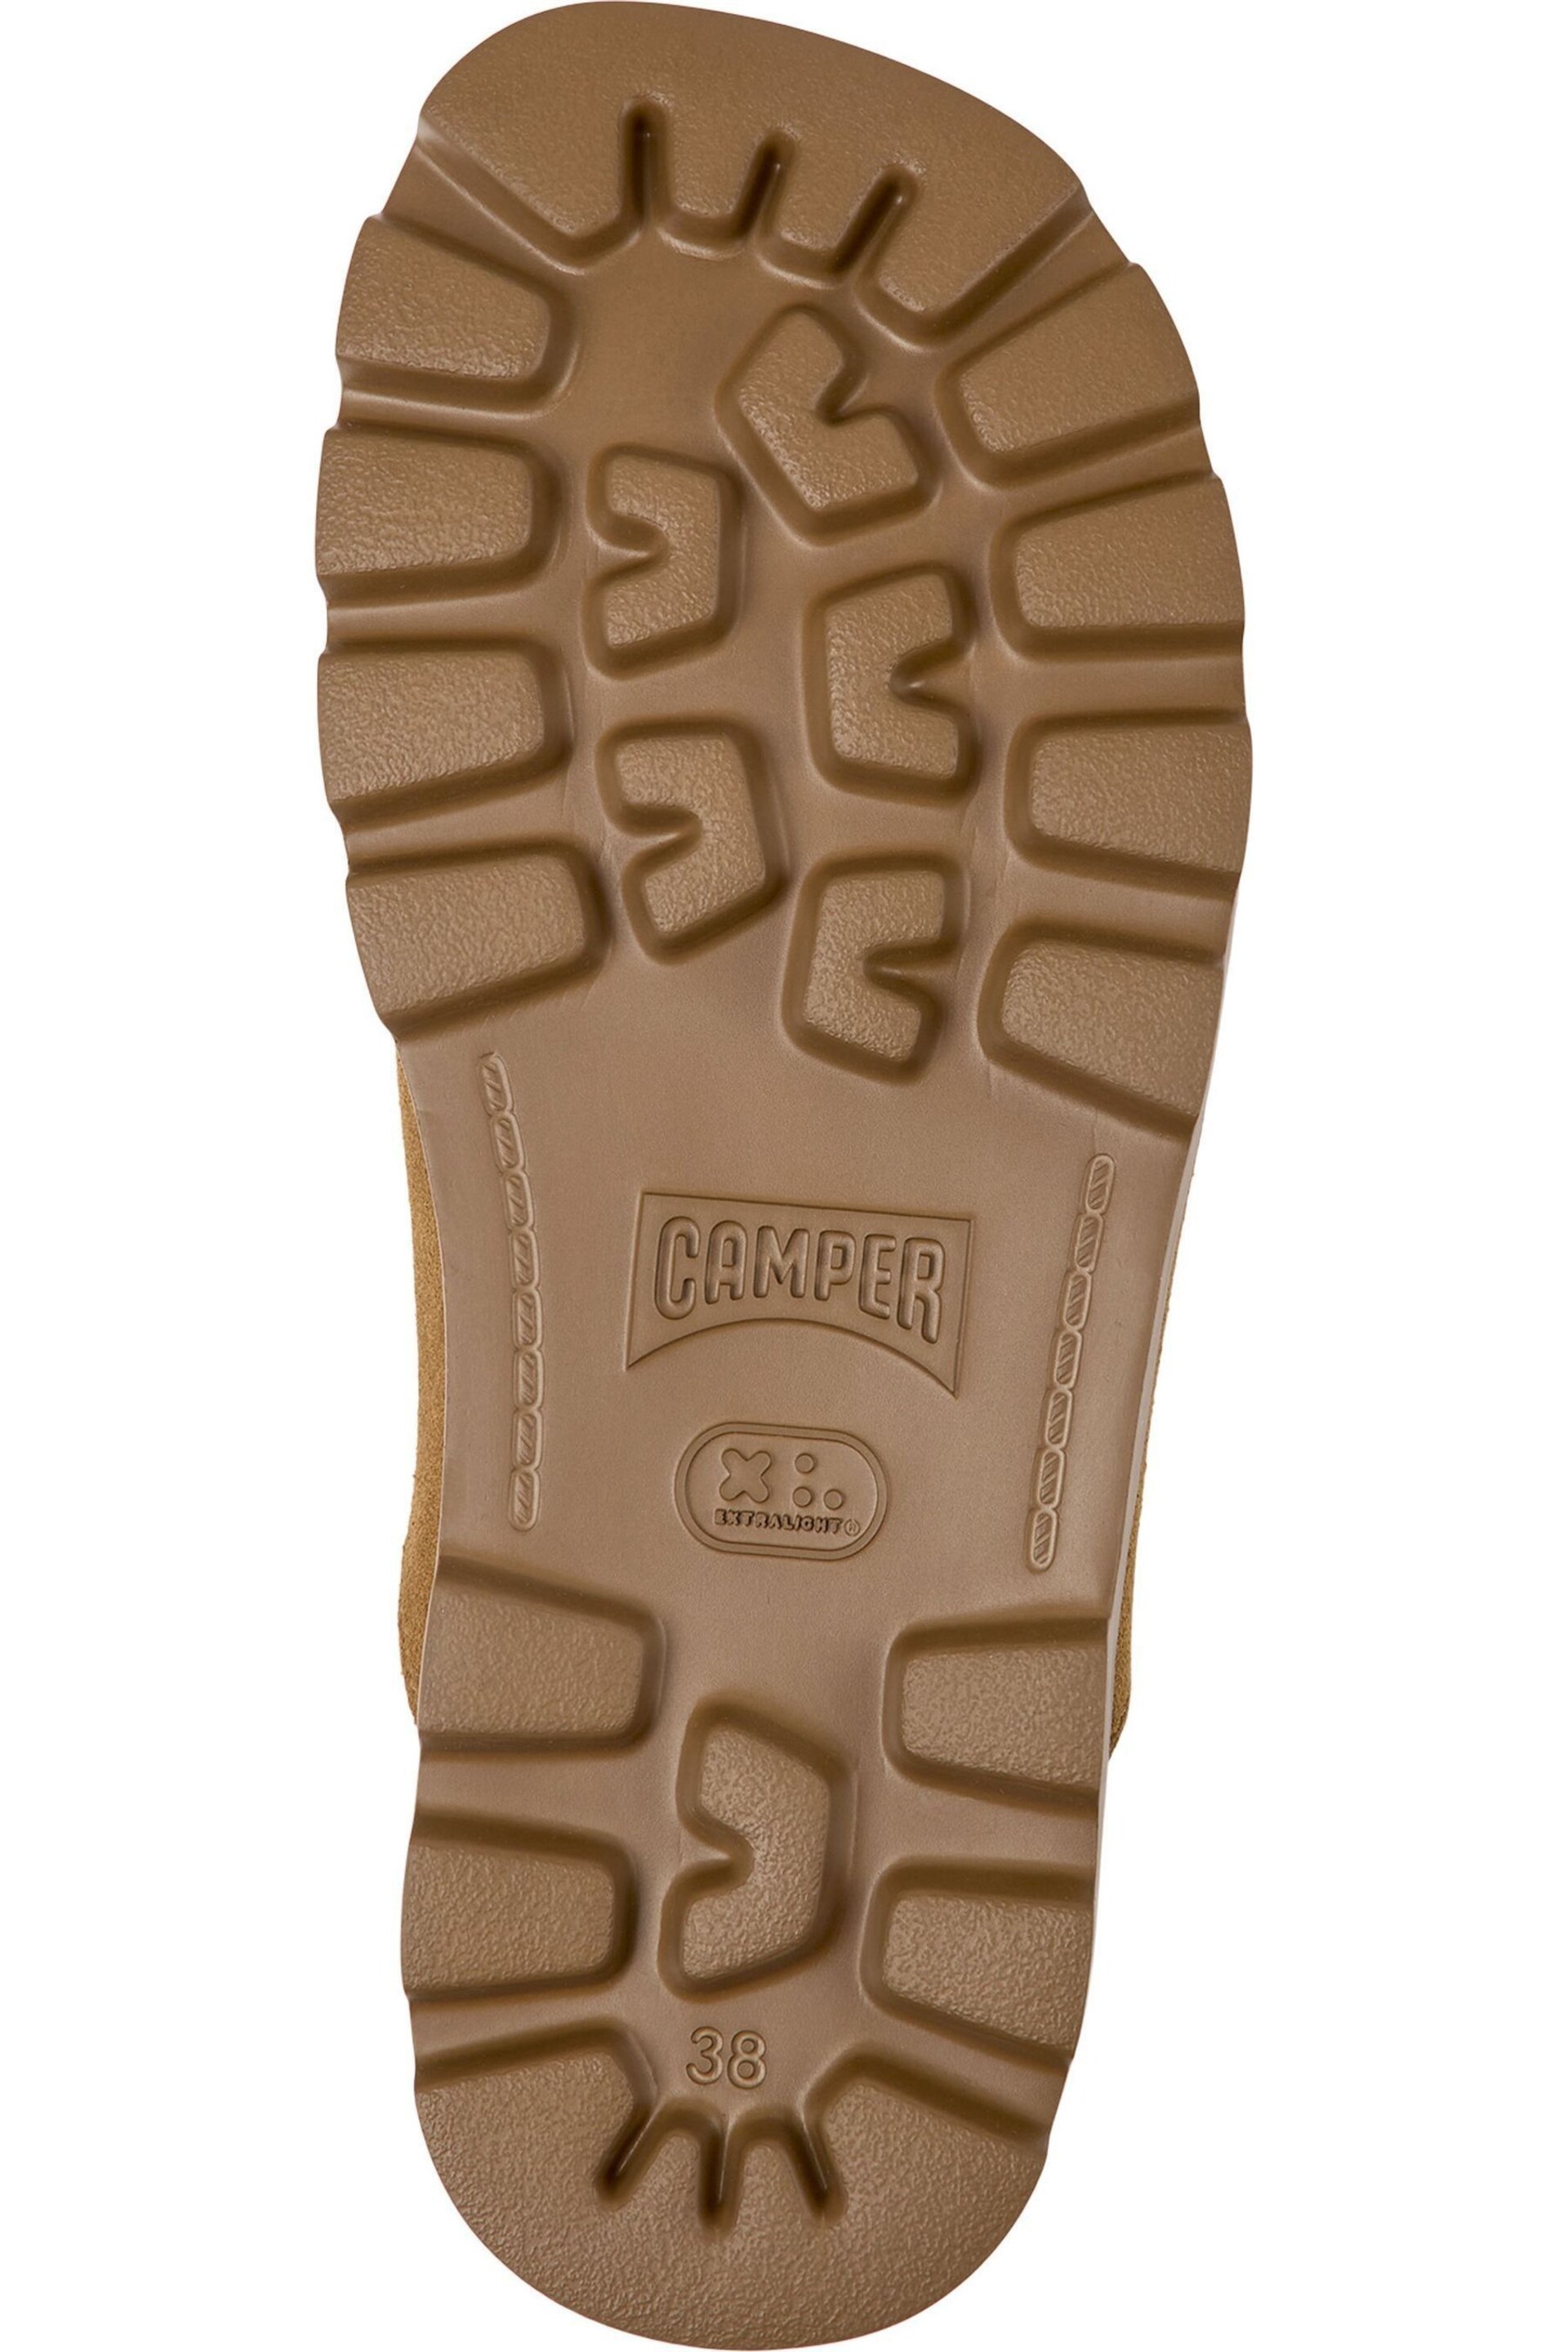 Camper Brutus Women's Brown Nubuck Sandals - Image 5 of 5